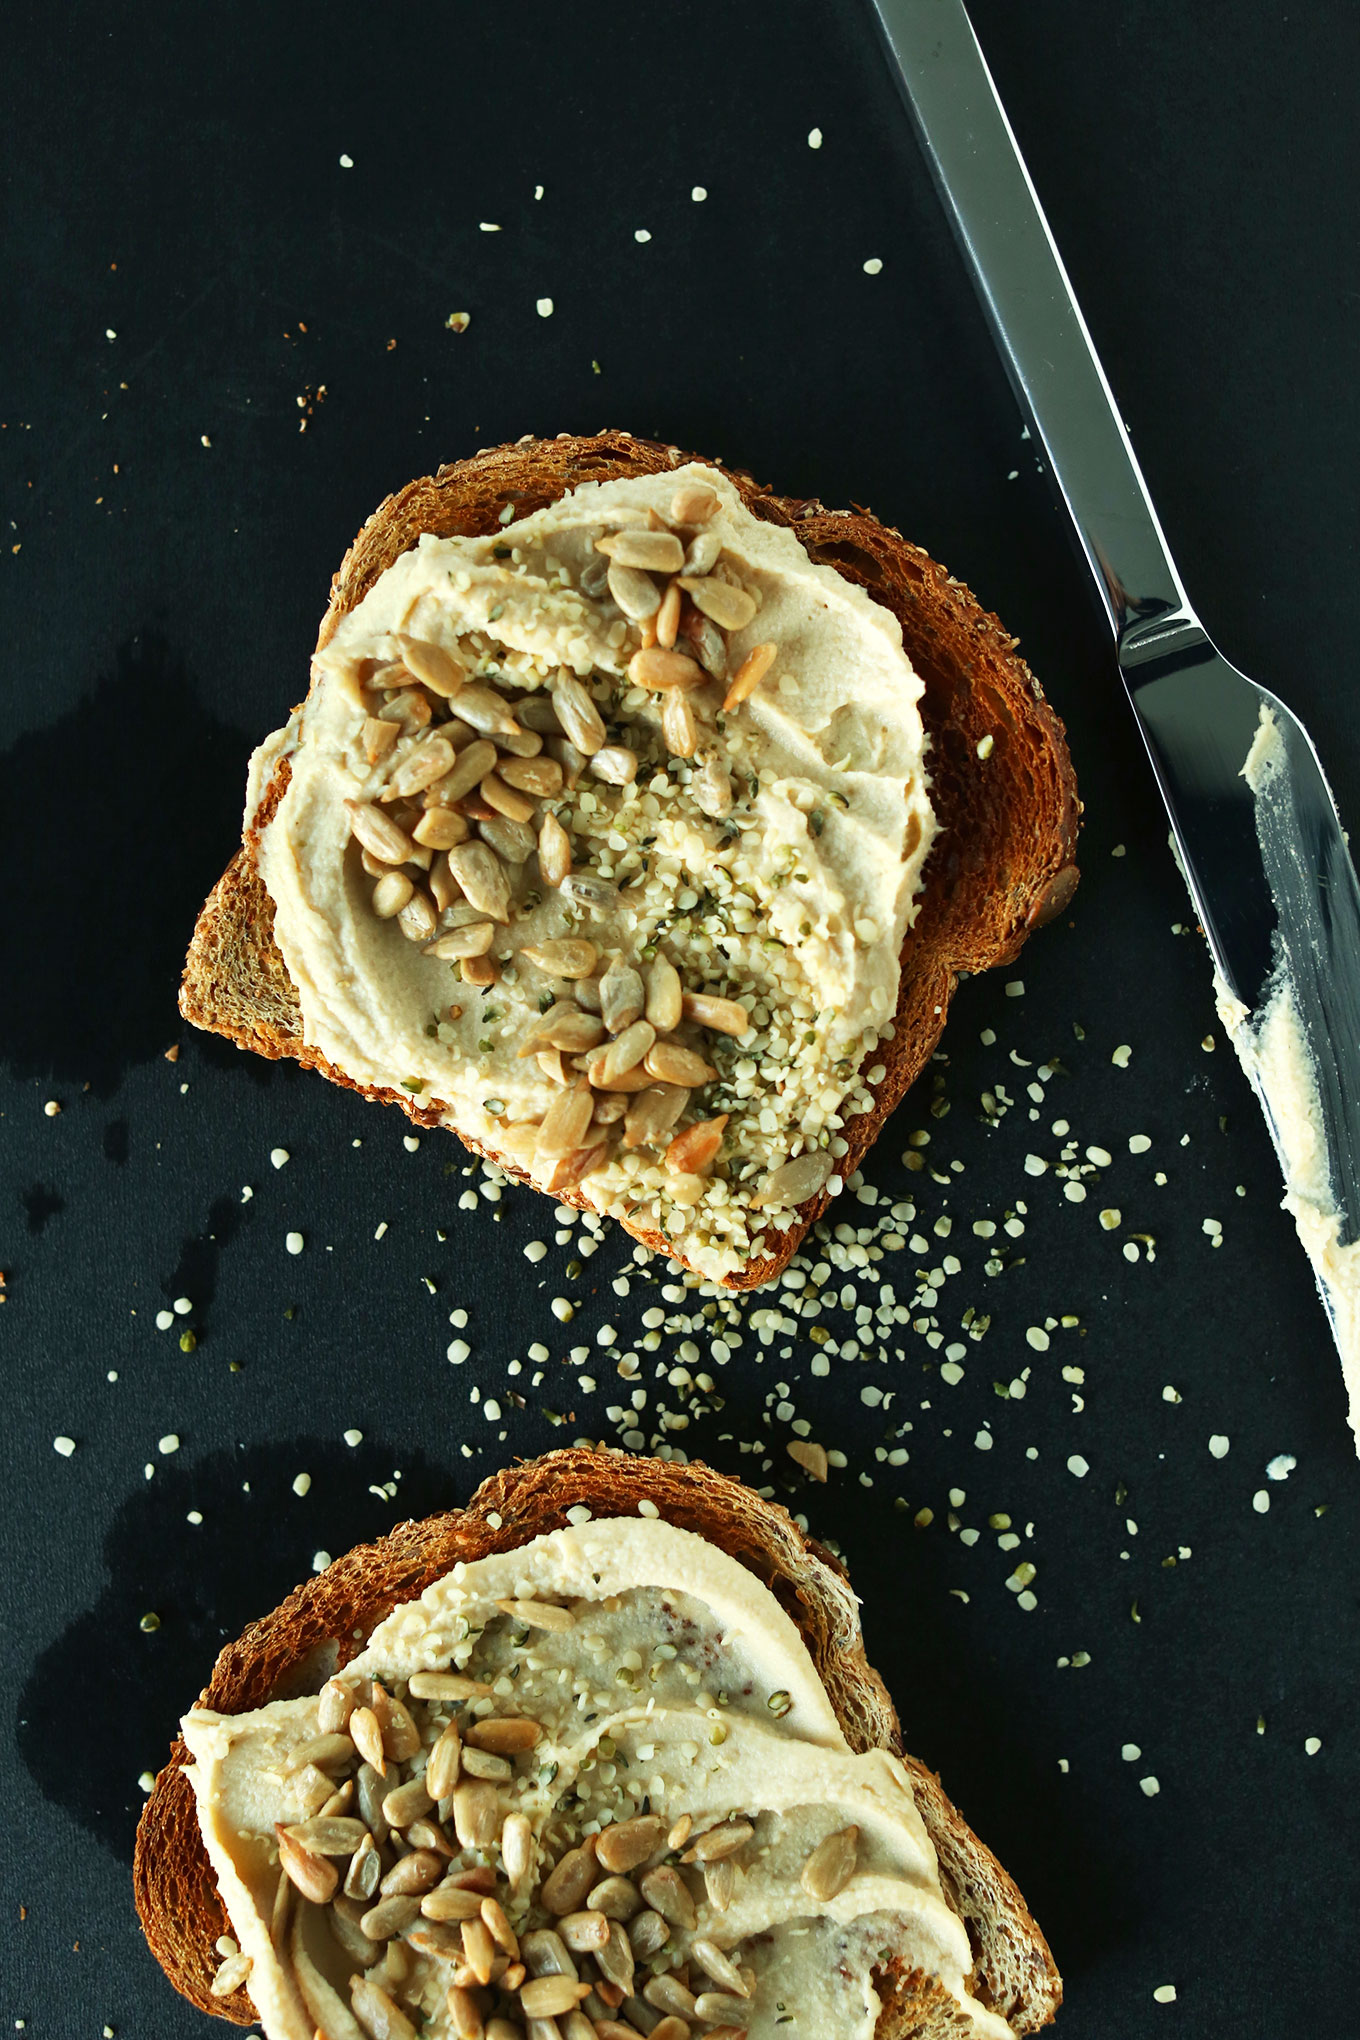 Slices of vegan toast with hummus, hemp seeds, and sunflower seeds